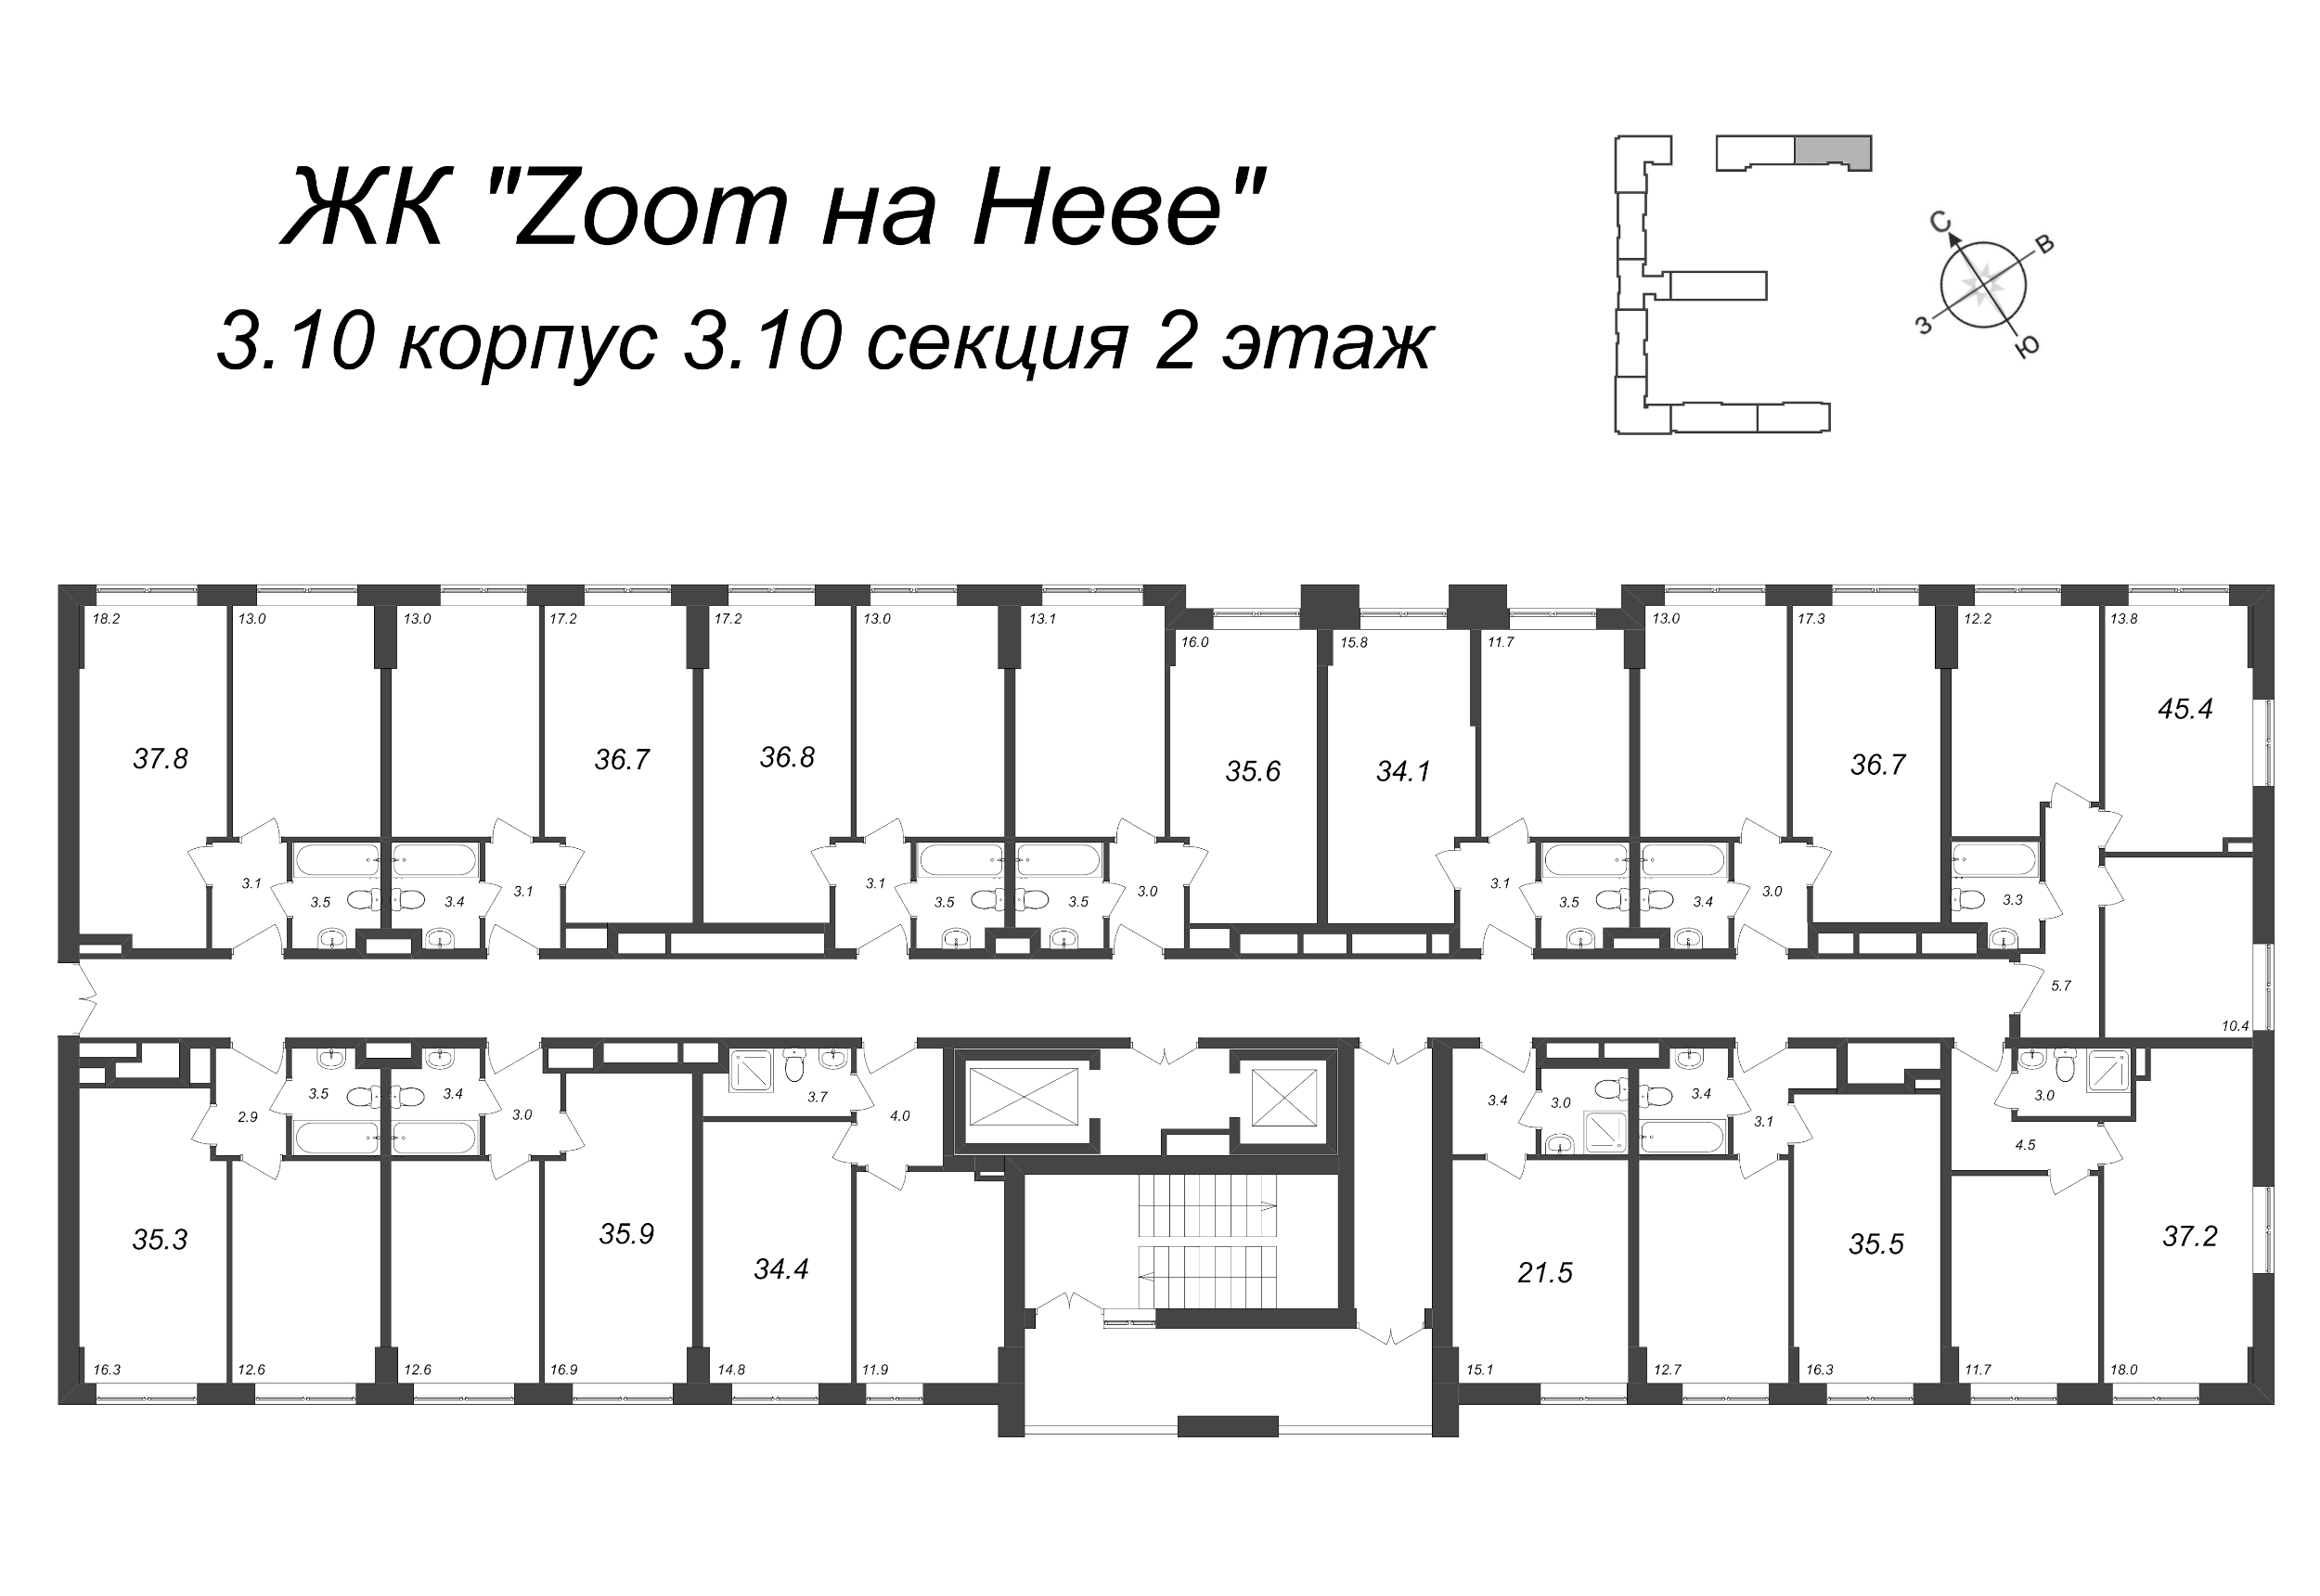 2-комнатная (Евро) квартира, 35.66 м² - планировка этажа